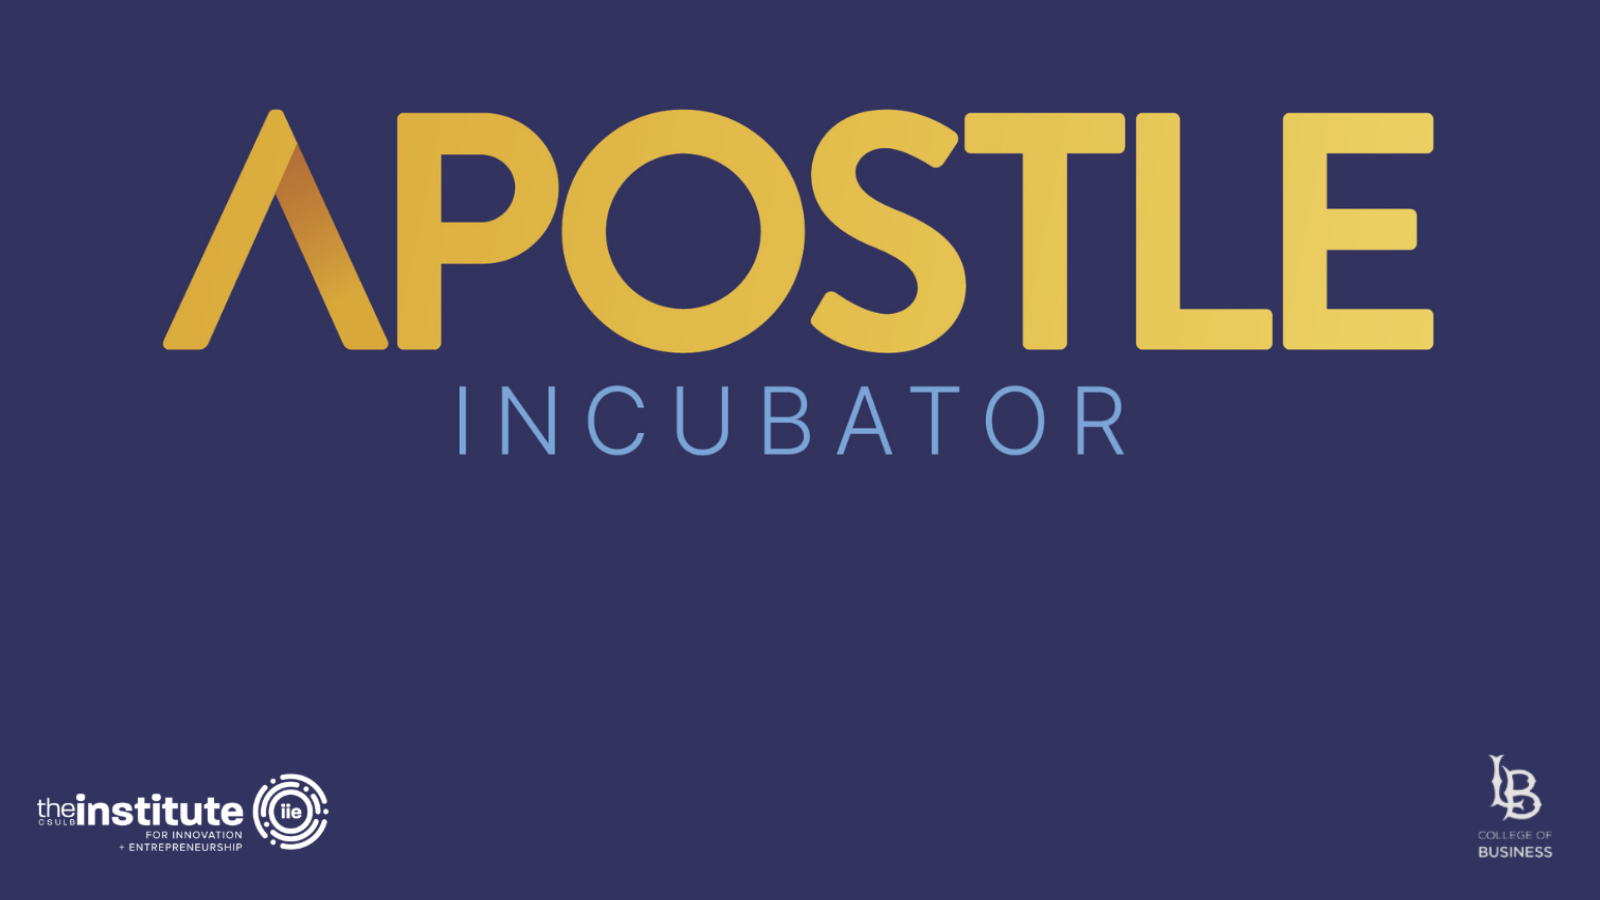 Apostle Incubator